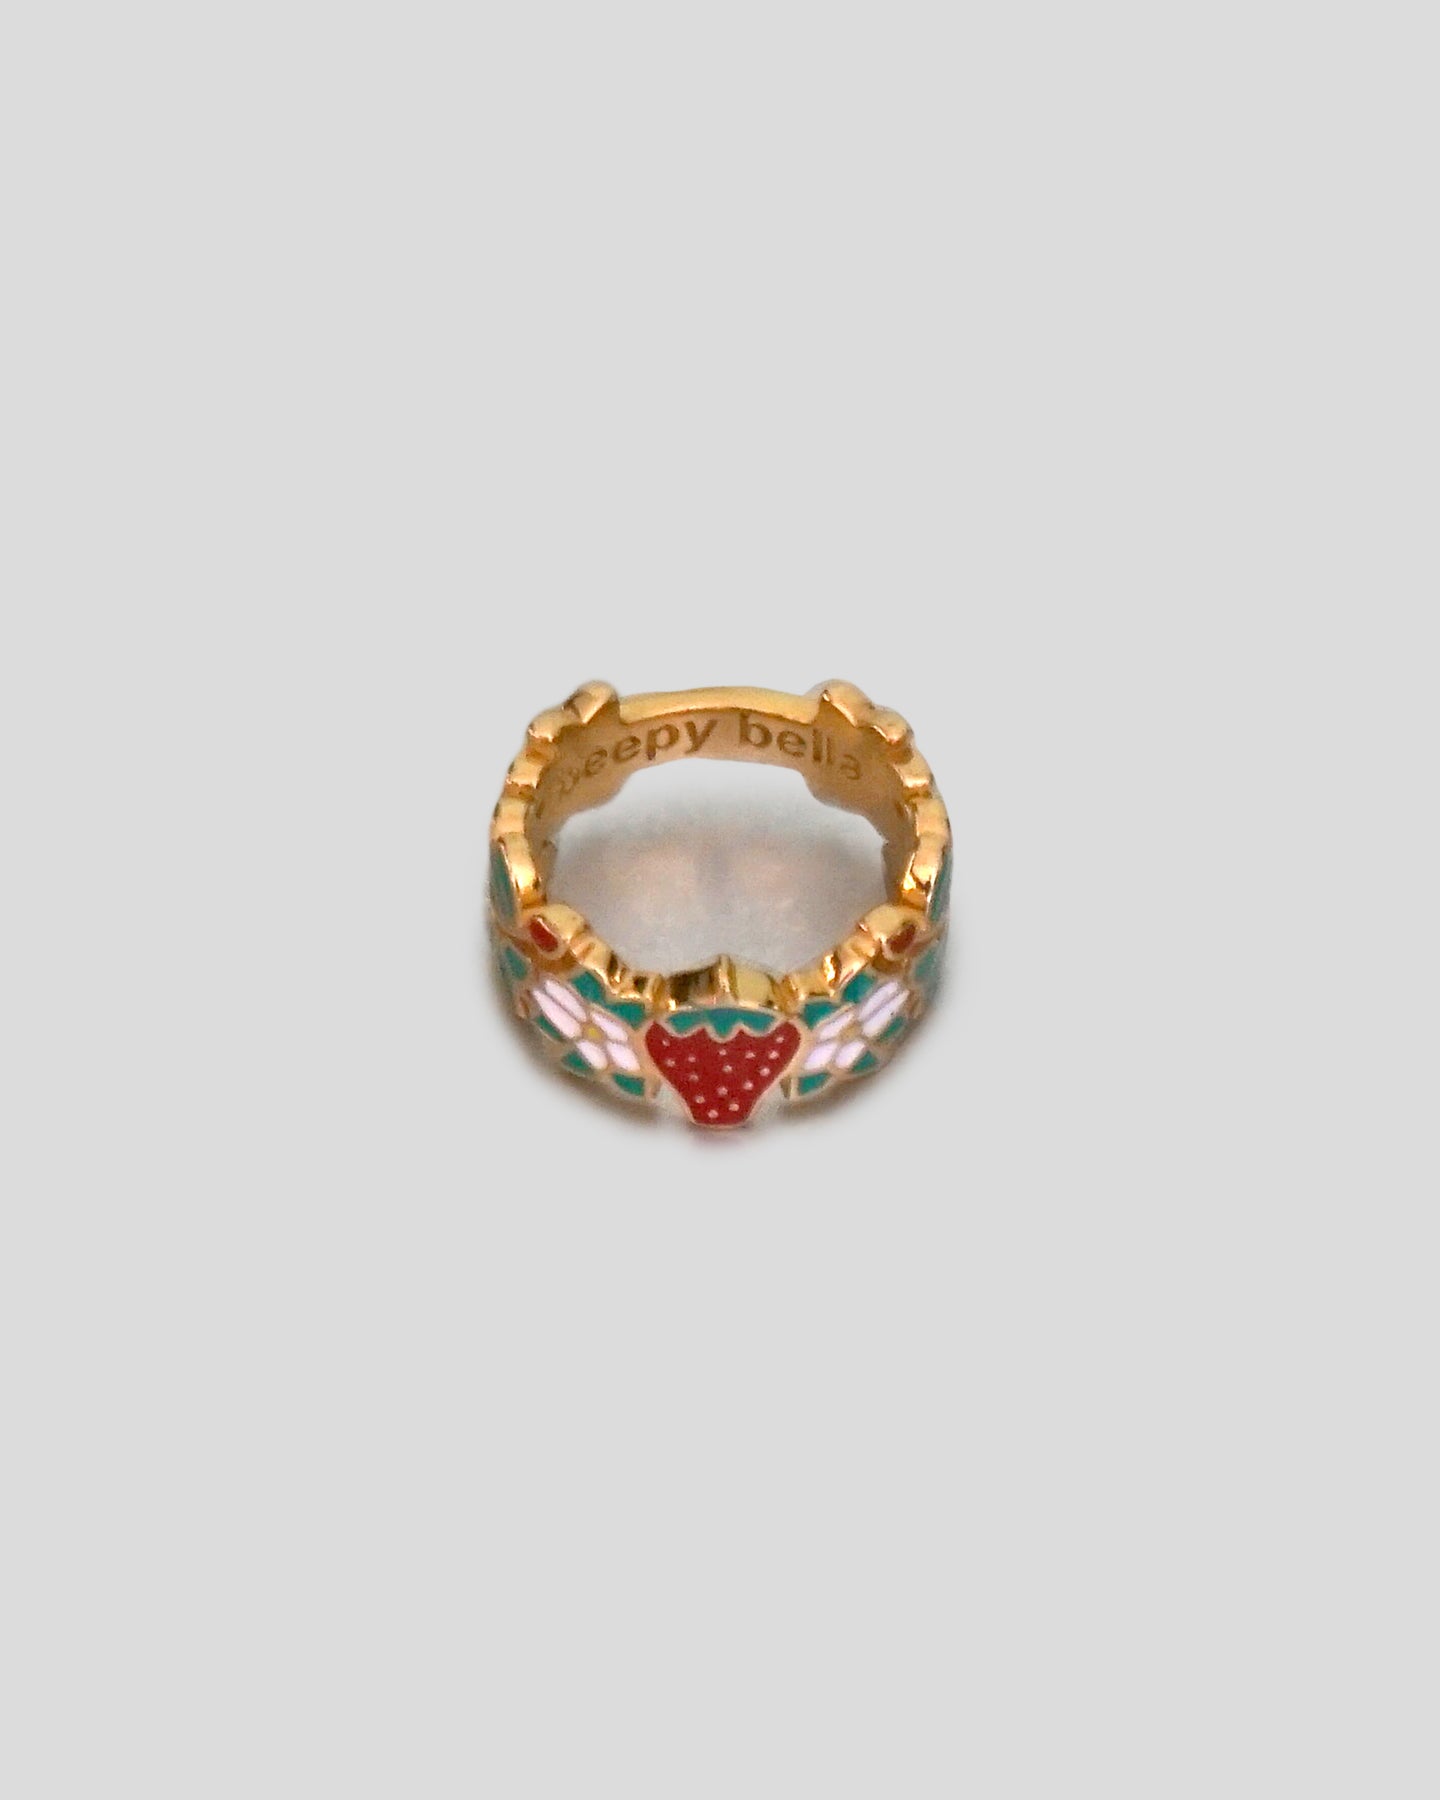 Beepy Bella - Strawberry Ring